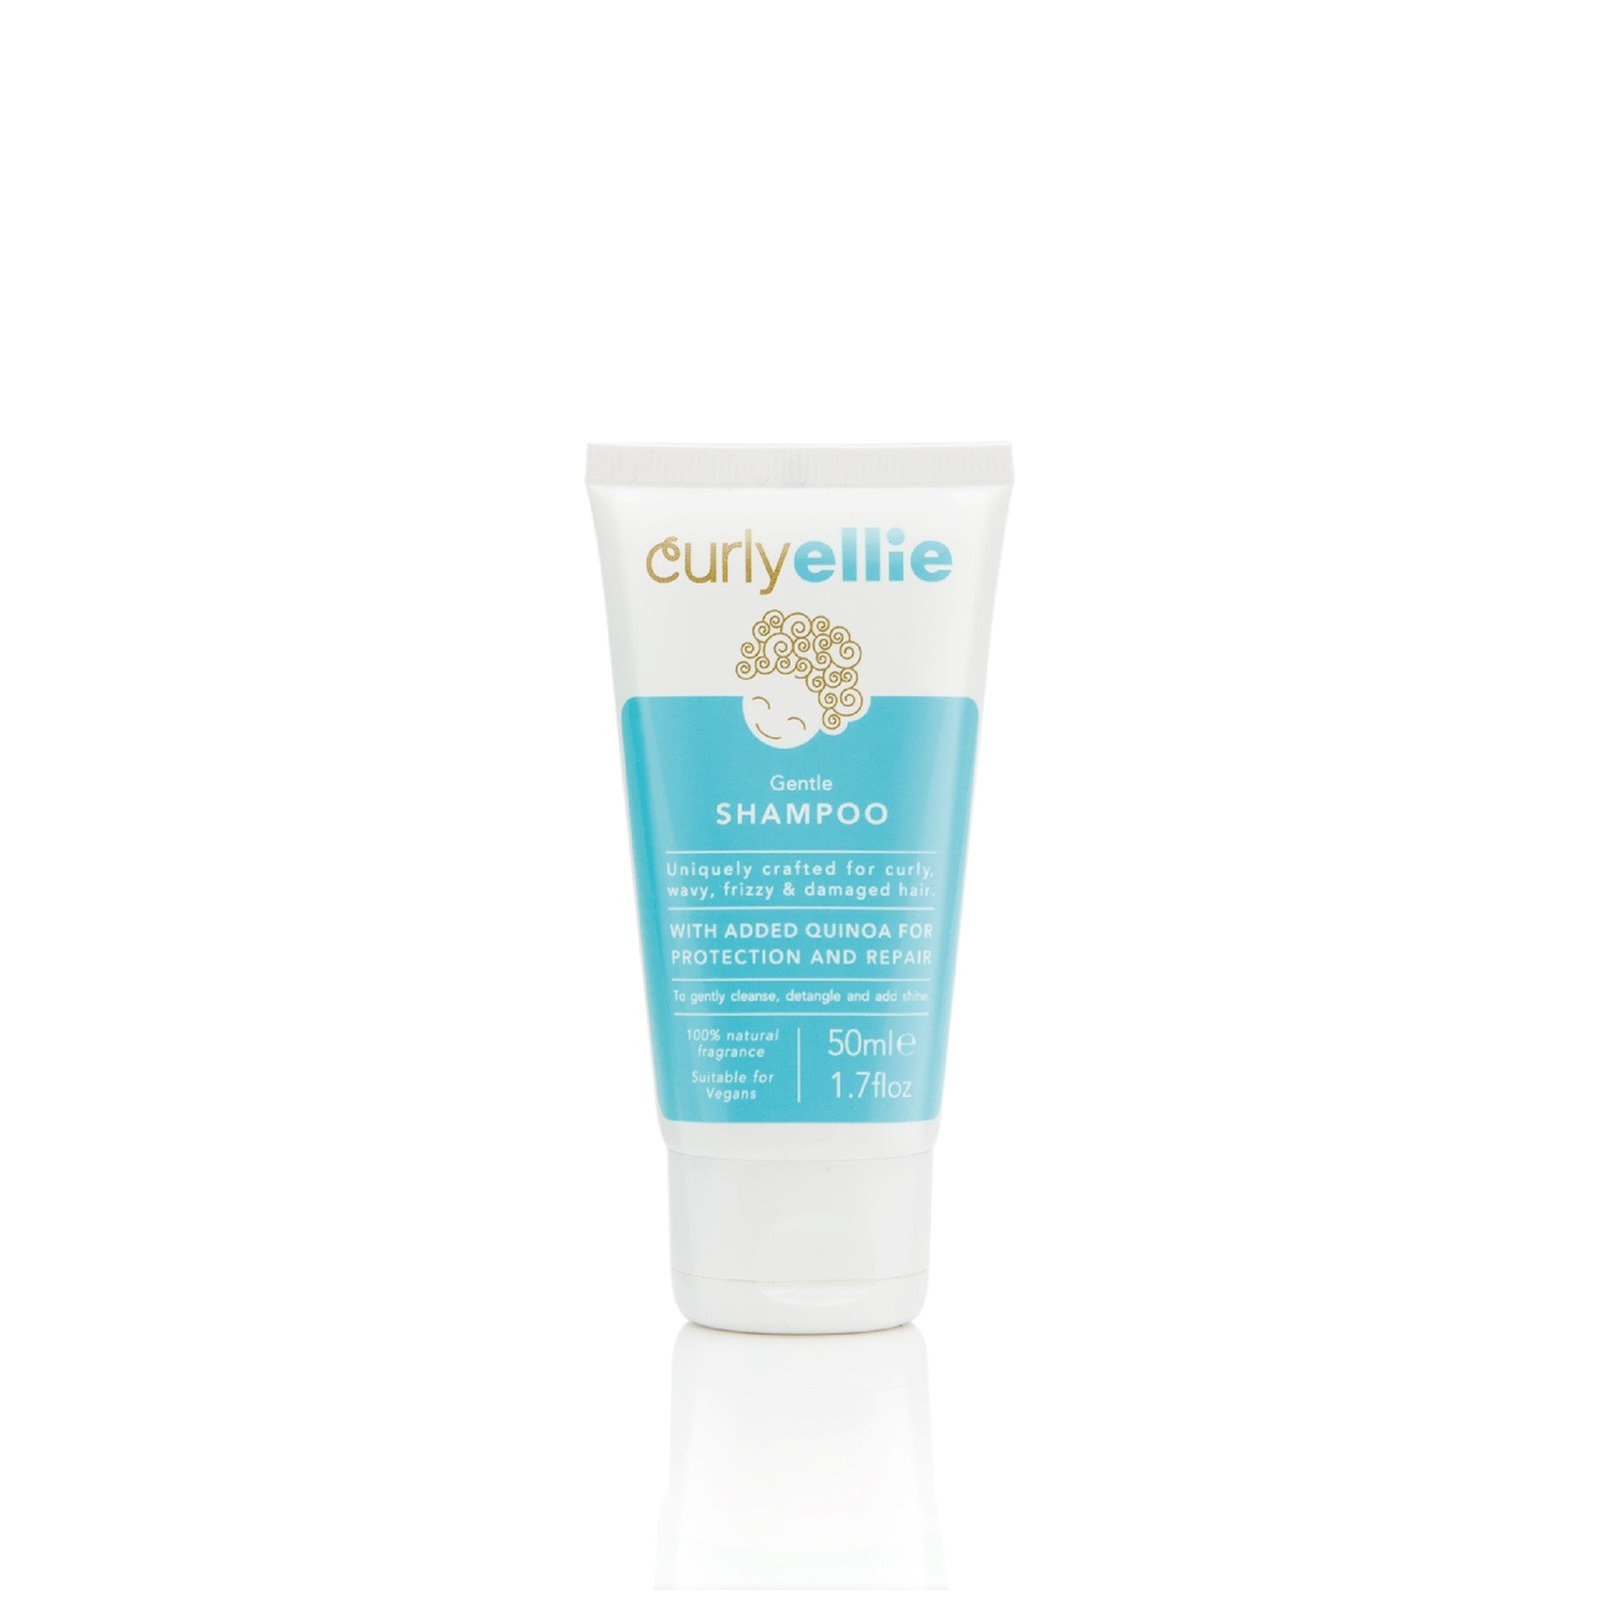 CurlyEllie Gentle Shampoo 50ml